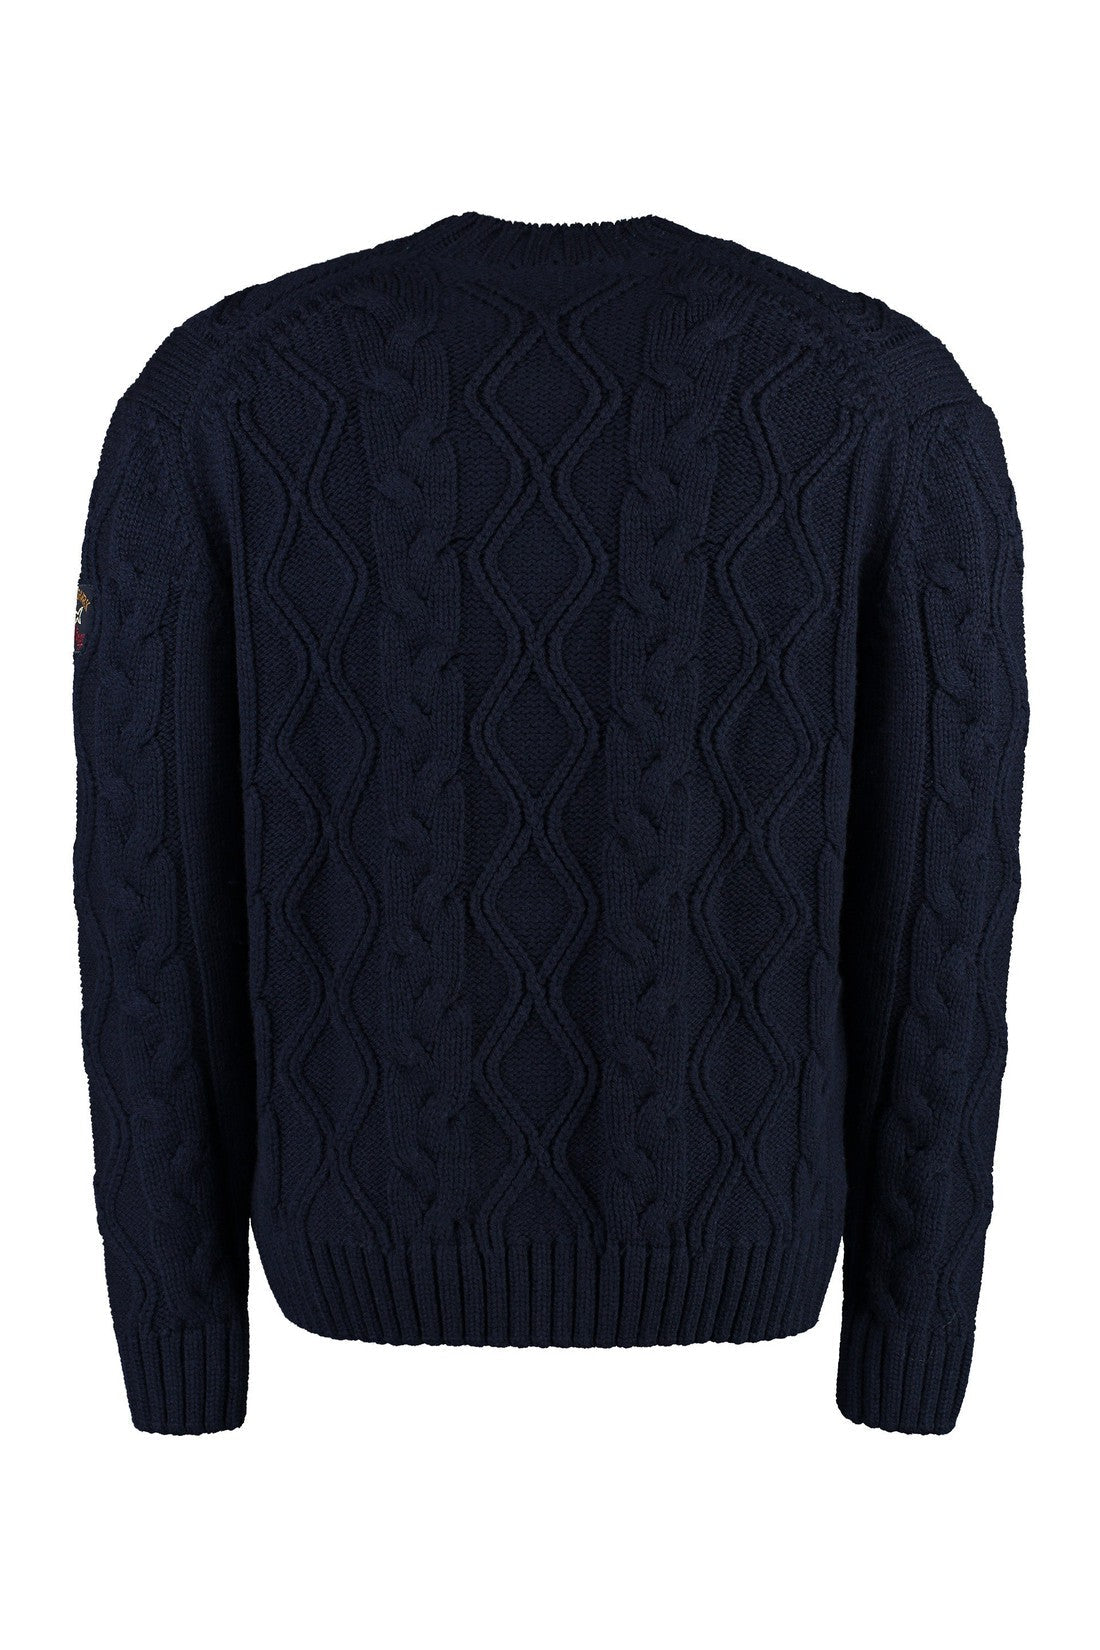 Piralo-OUTLET-SALE-Cable knit sweater-ARCHIVIST